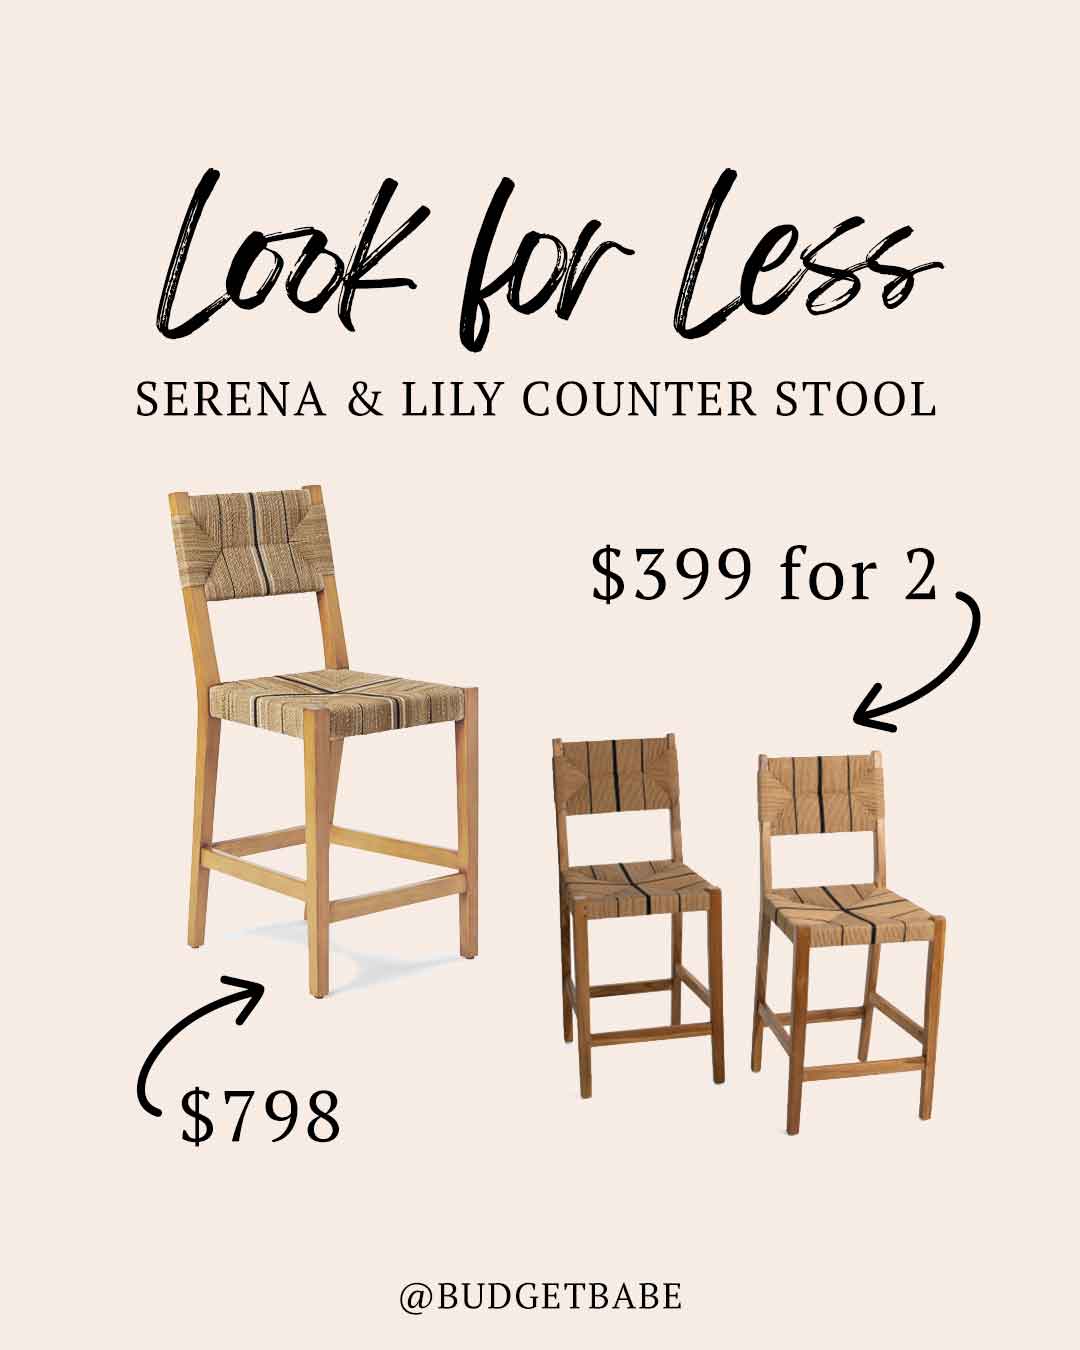 Serena & Lily Carson stool lookalike